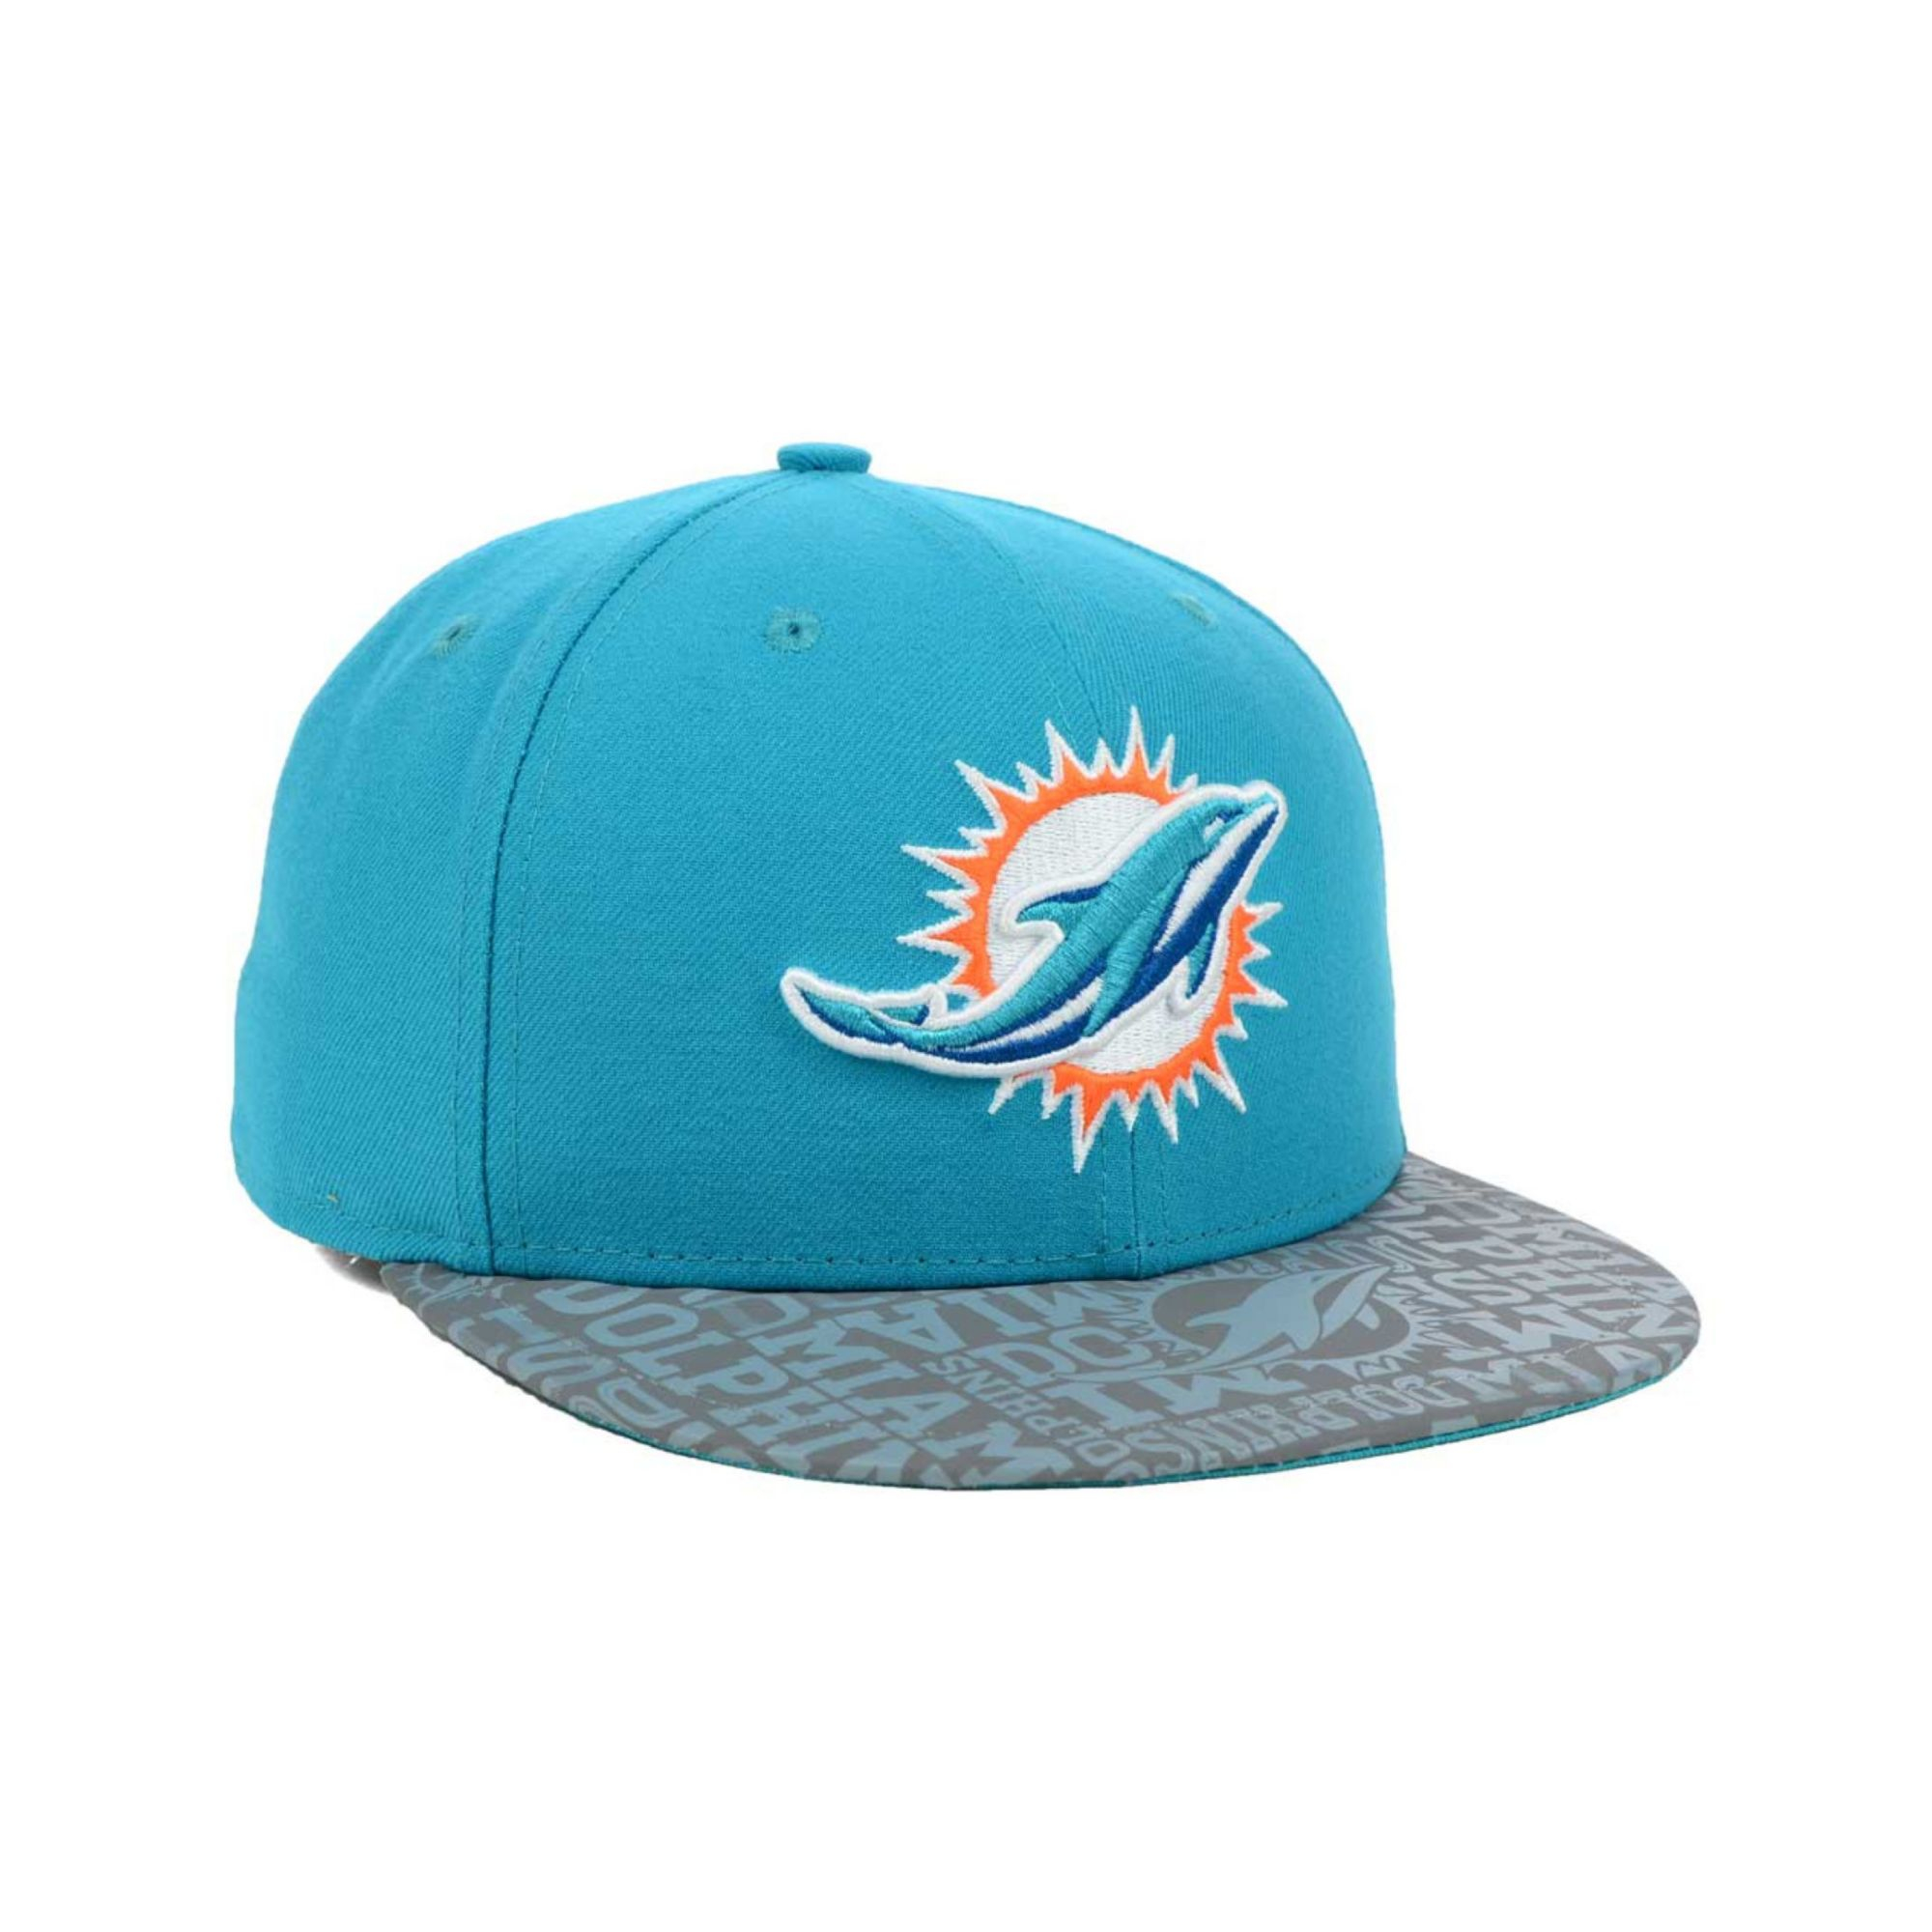 New era Miami Dolphins Nfl Draft 59fifty Cap in Blue for Men (Aqua/Gray) Lyst